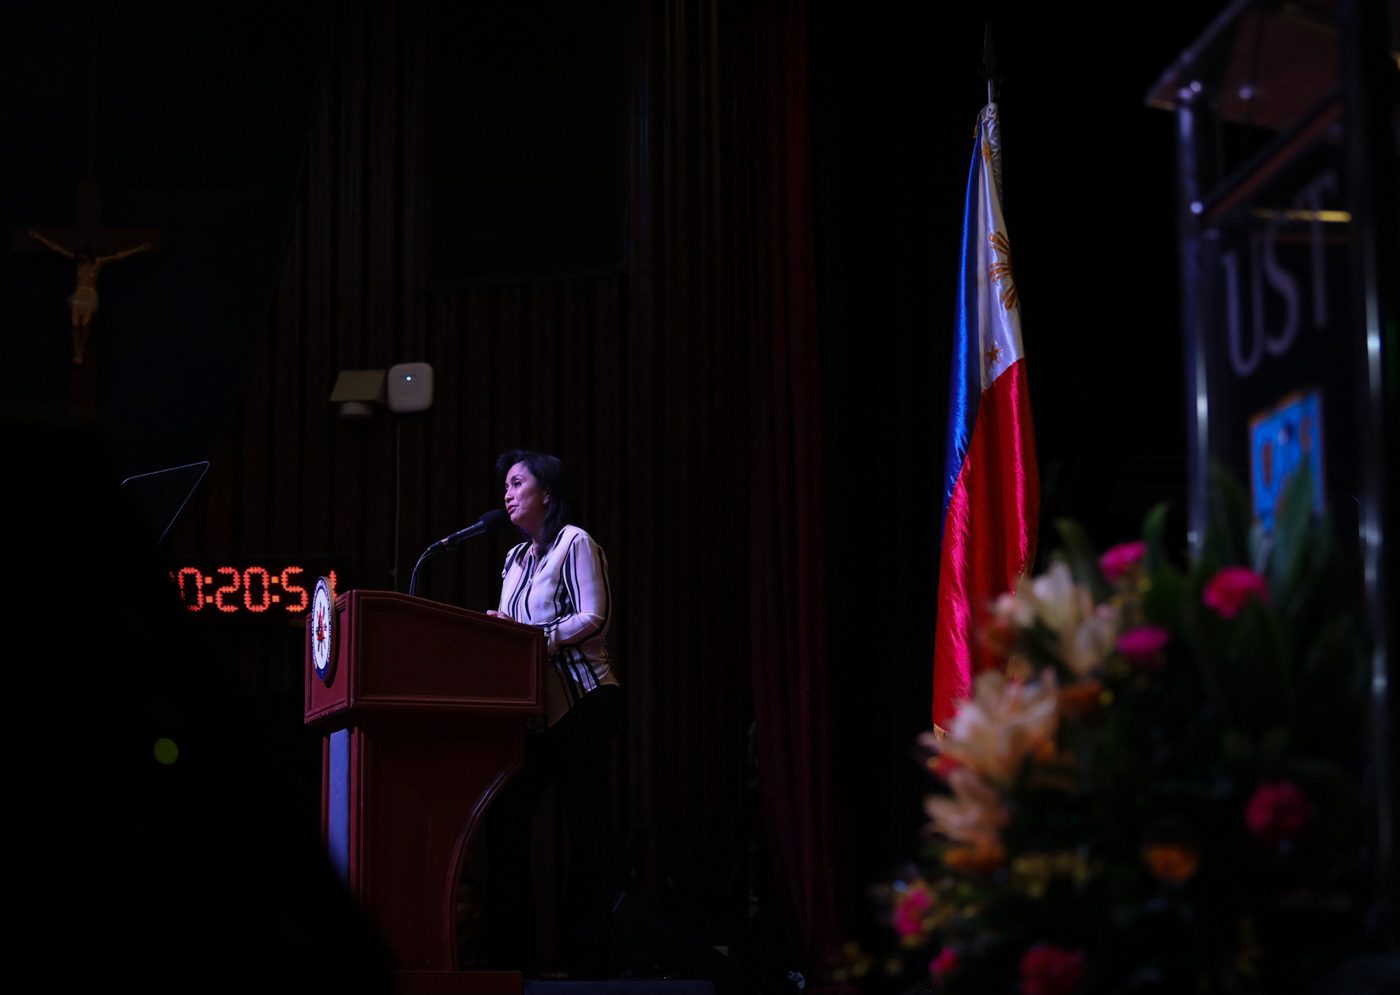 Marcos ingin ‘meninjau’ kisah pemilu 2016, kata Robredo